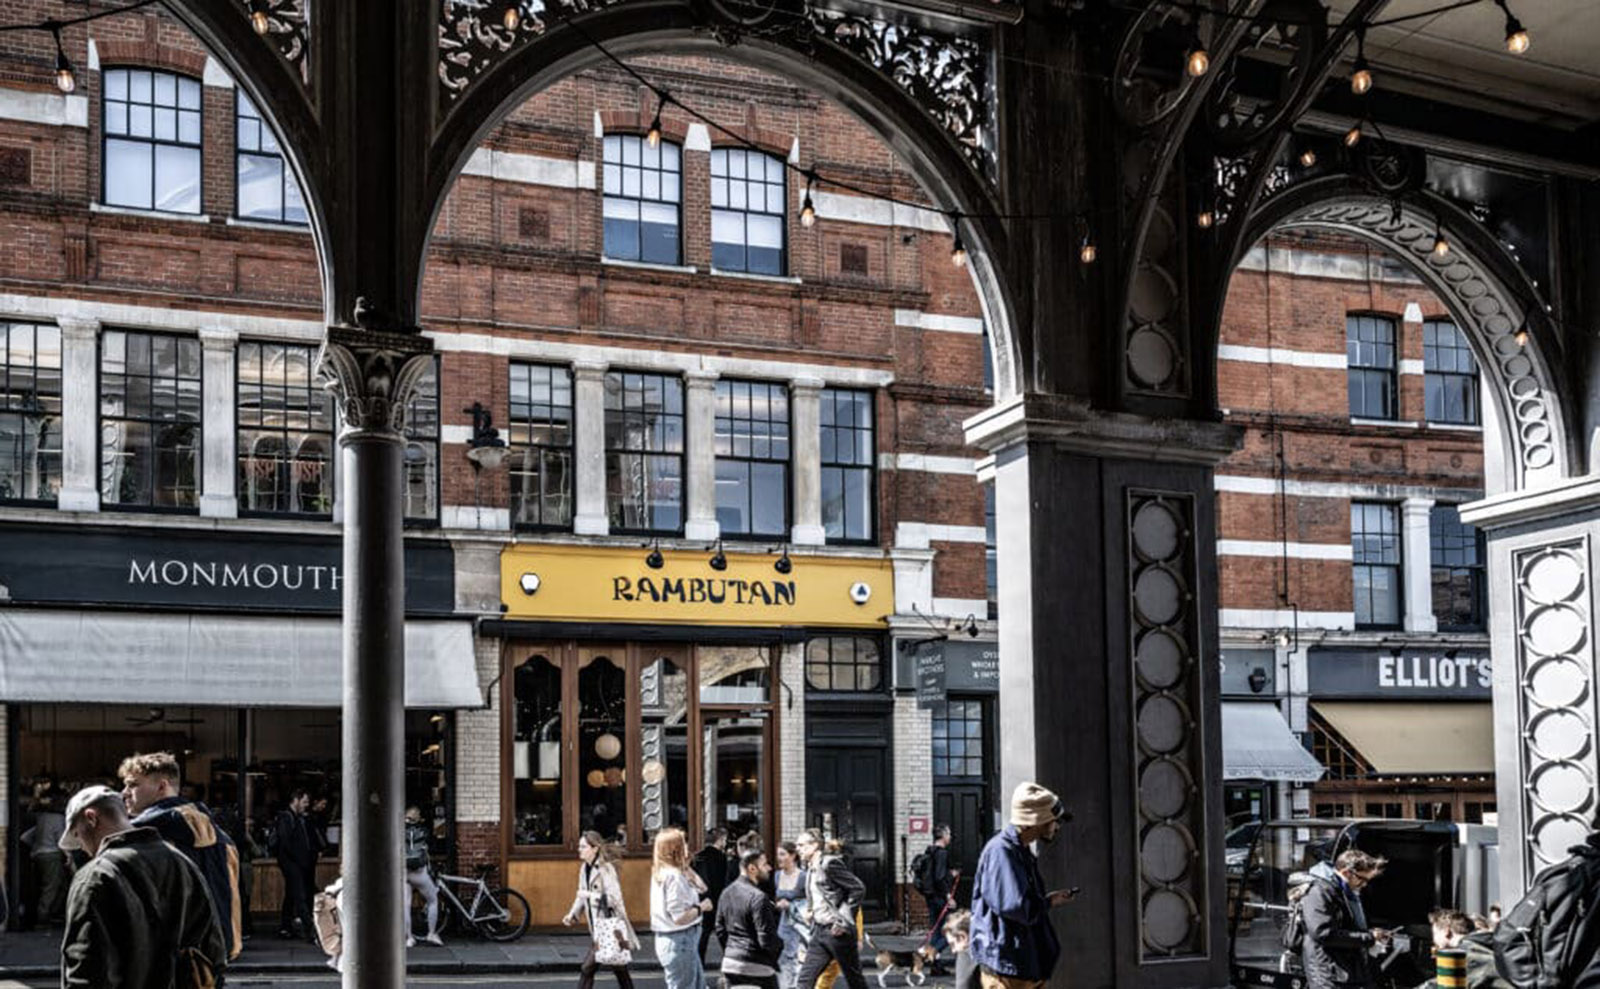 yellow rambutan restaurant sign viewed through the black wrought iron arches of borough market